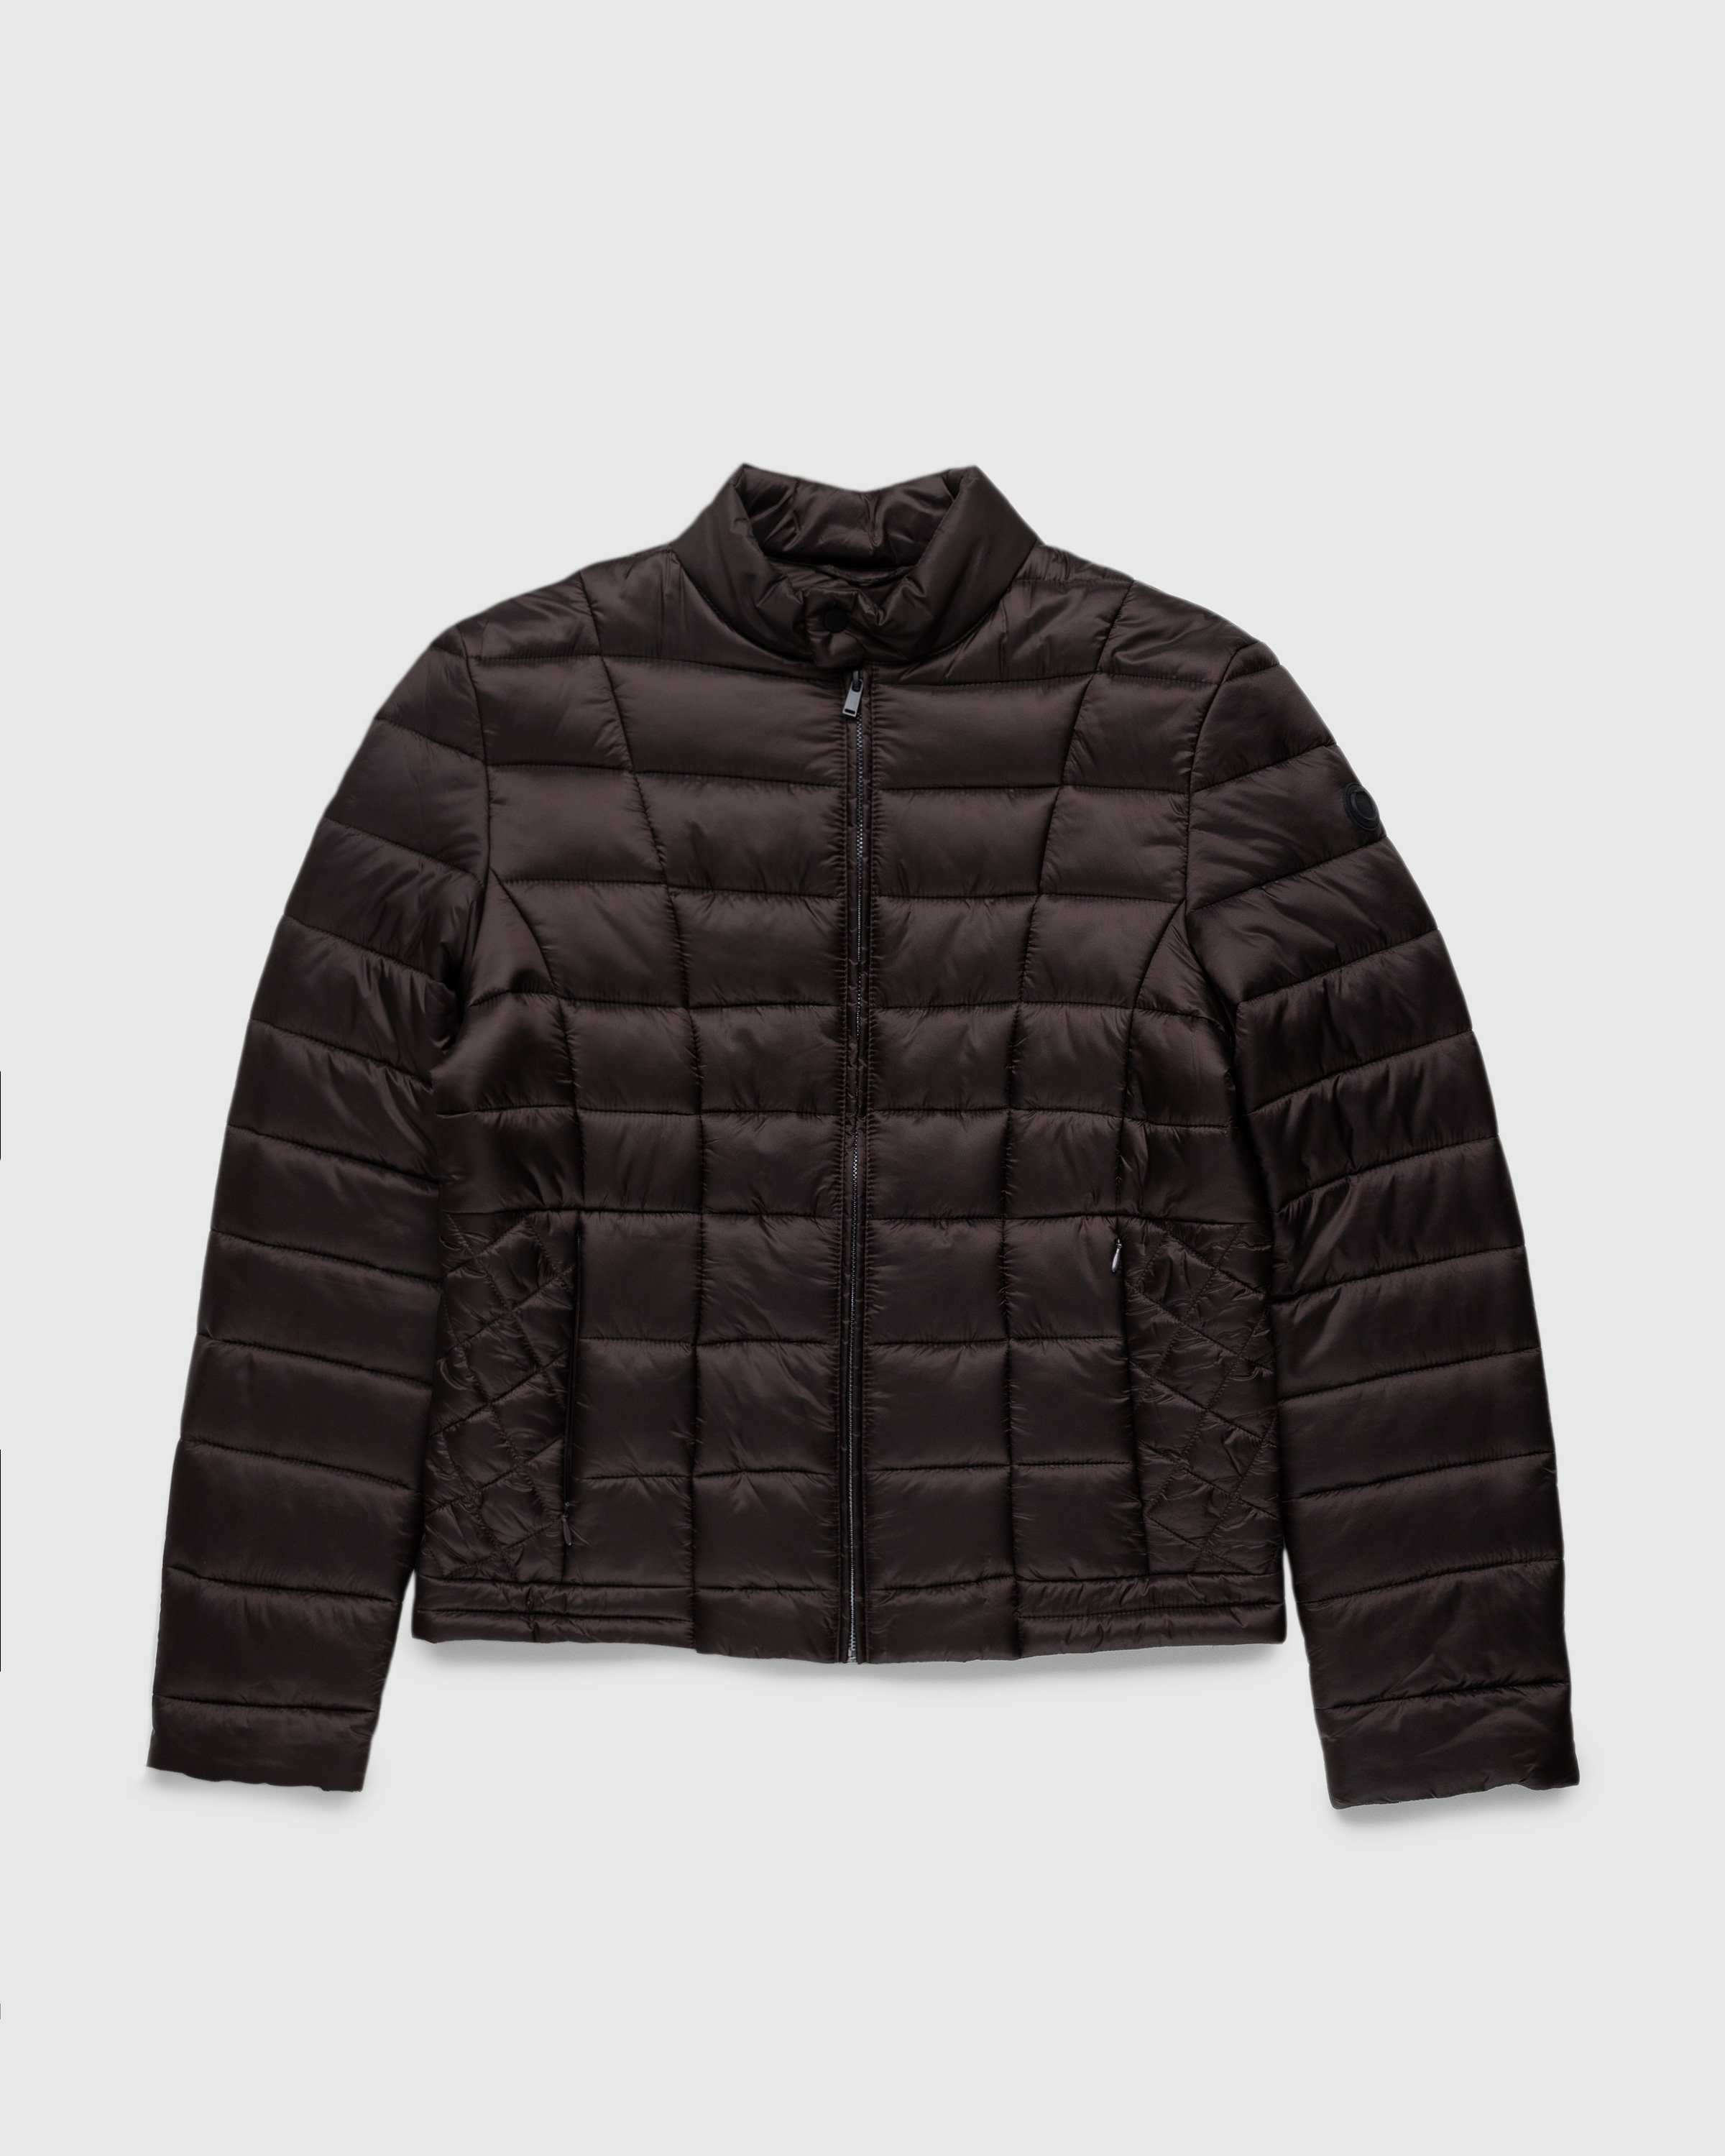 Trussardi - Quilted Jacket Matt Nylon - Clothing - Green - Image 1